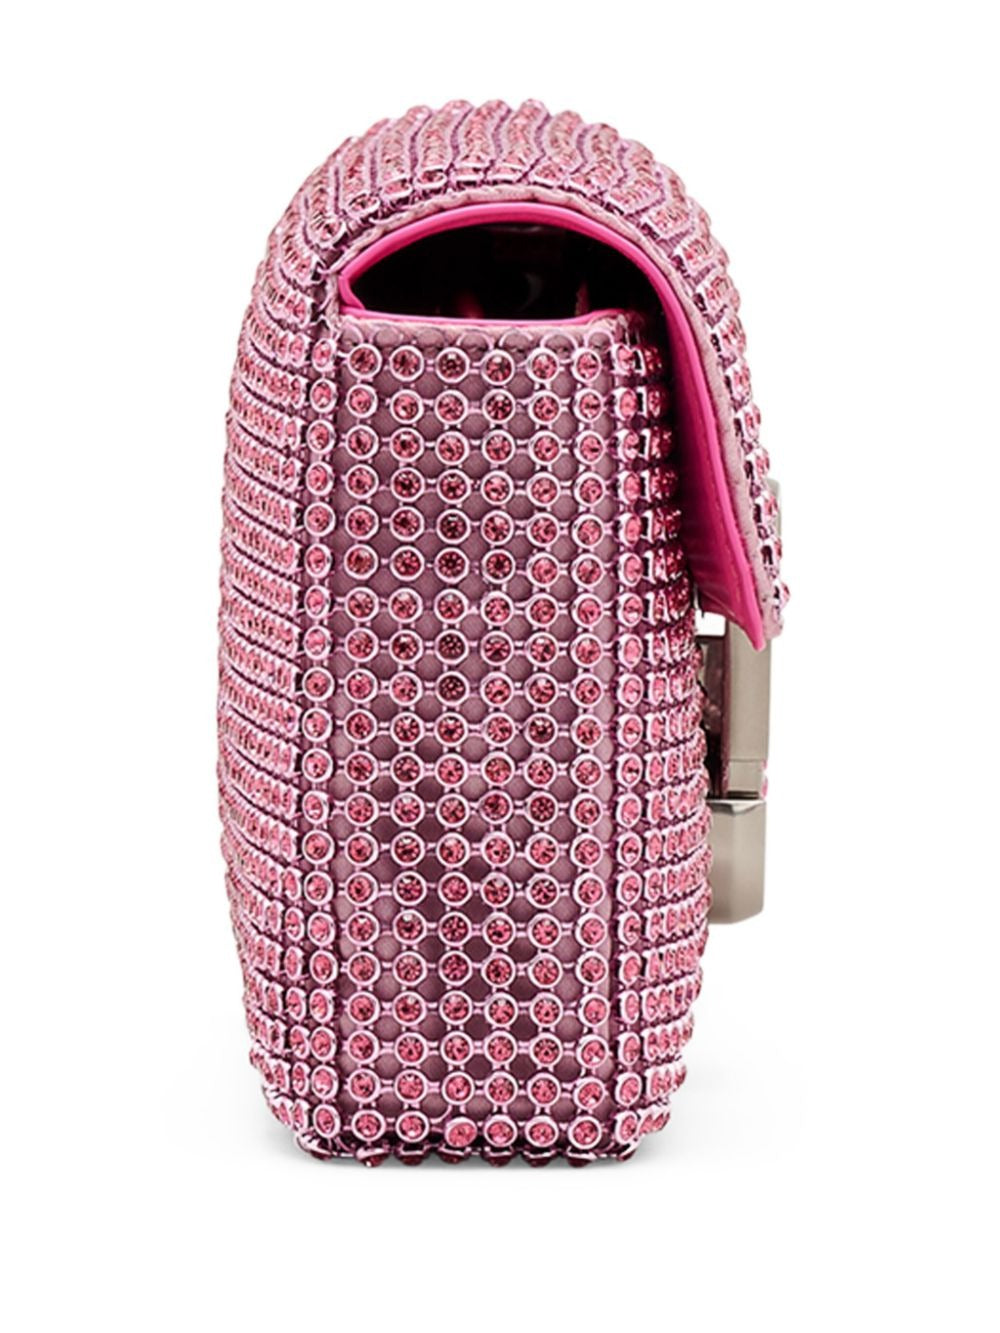 Marc Jacobs The Rhinestone J Marc Mini Shoulder Bag in Petal Pink